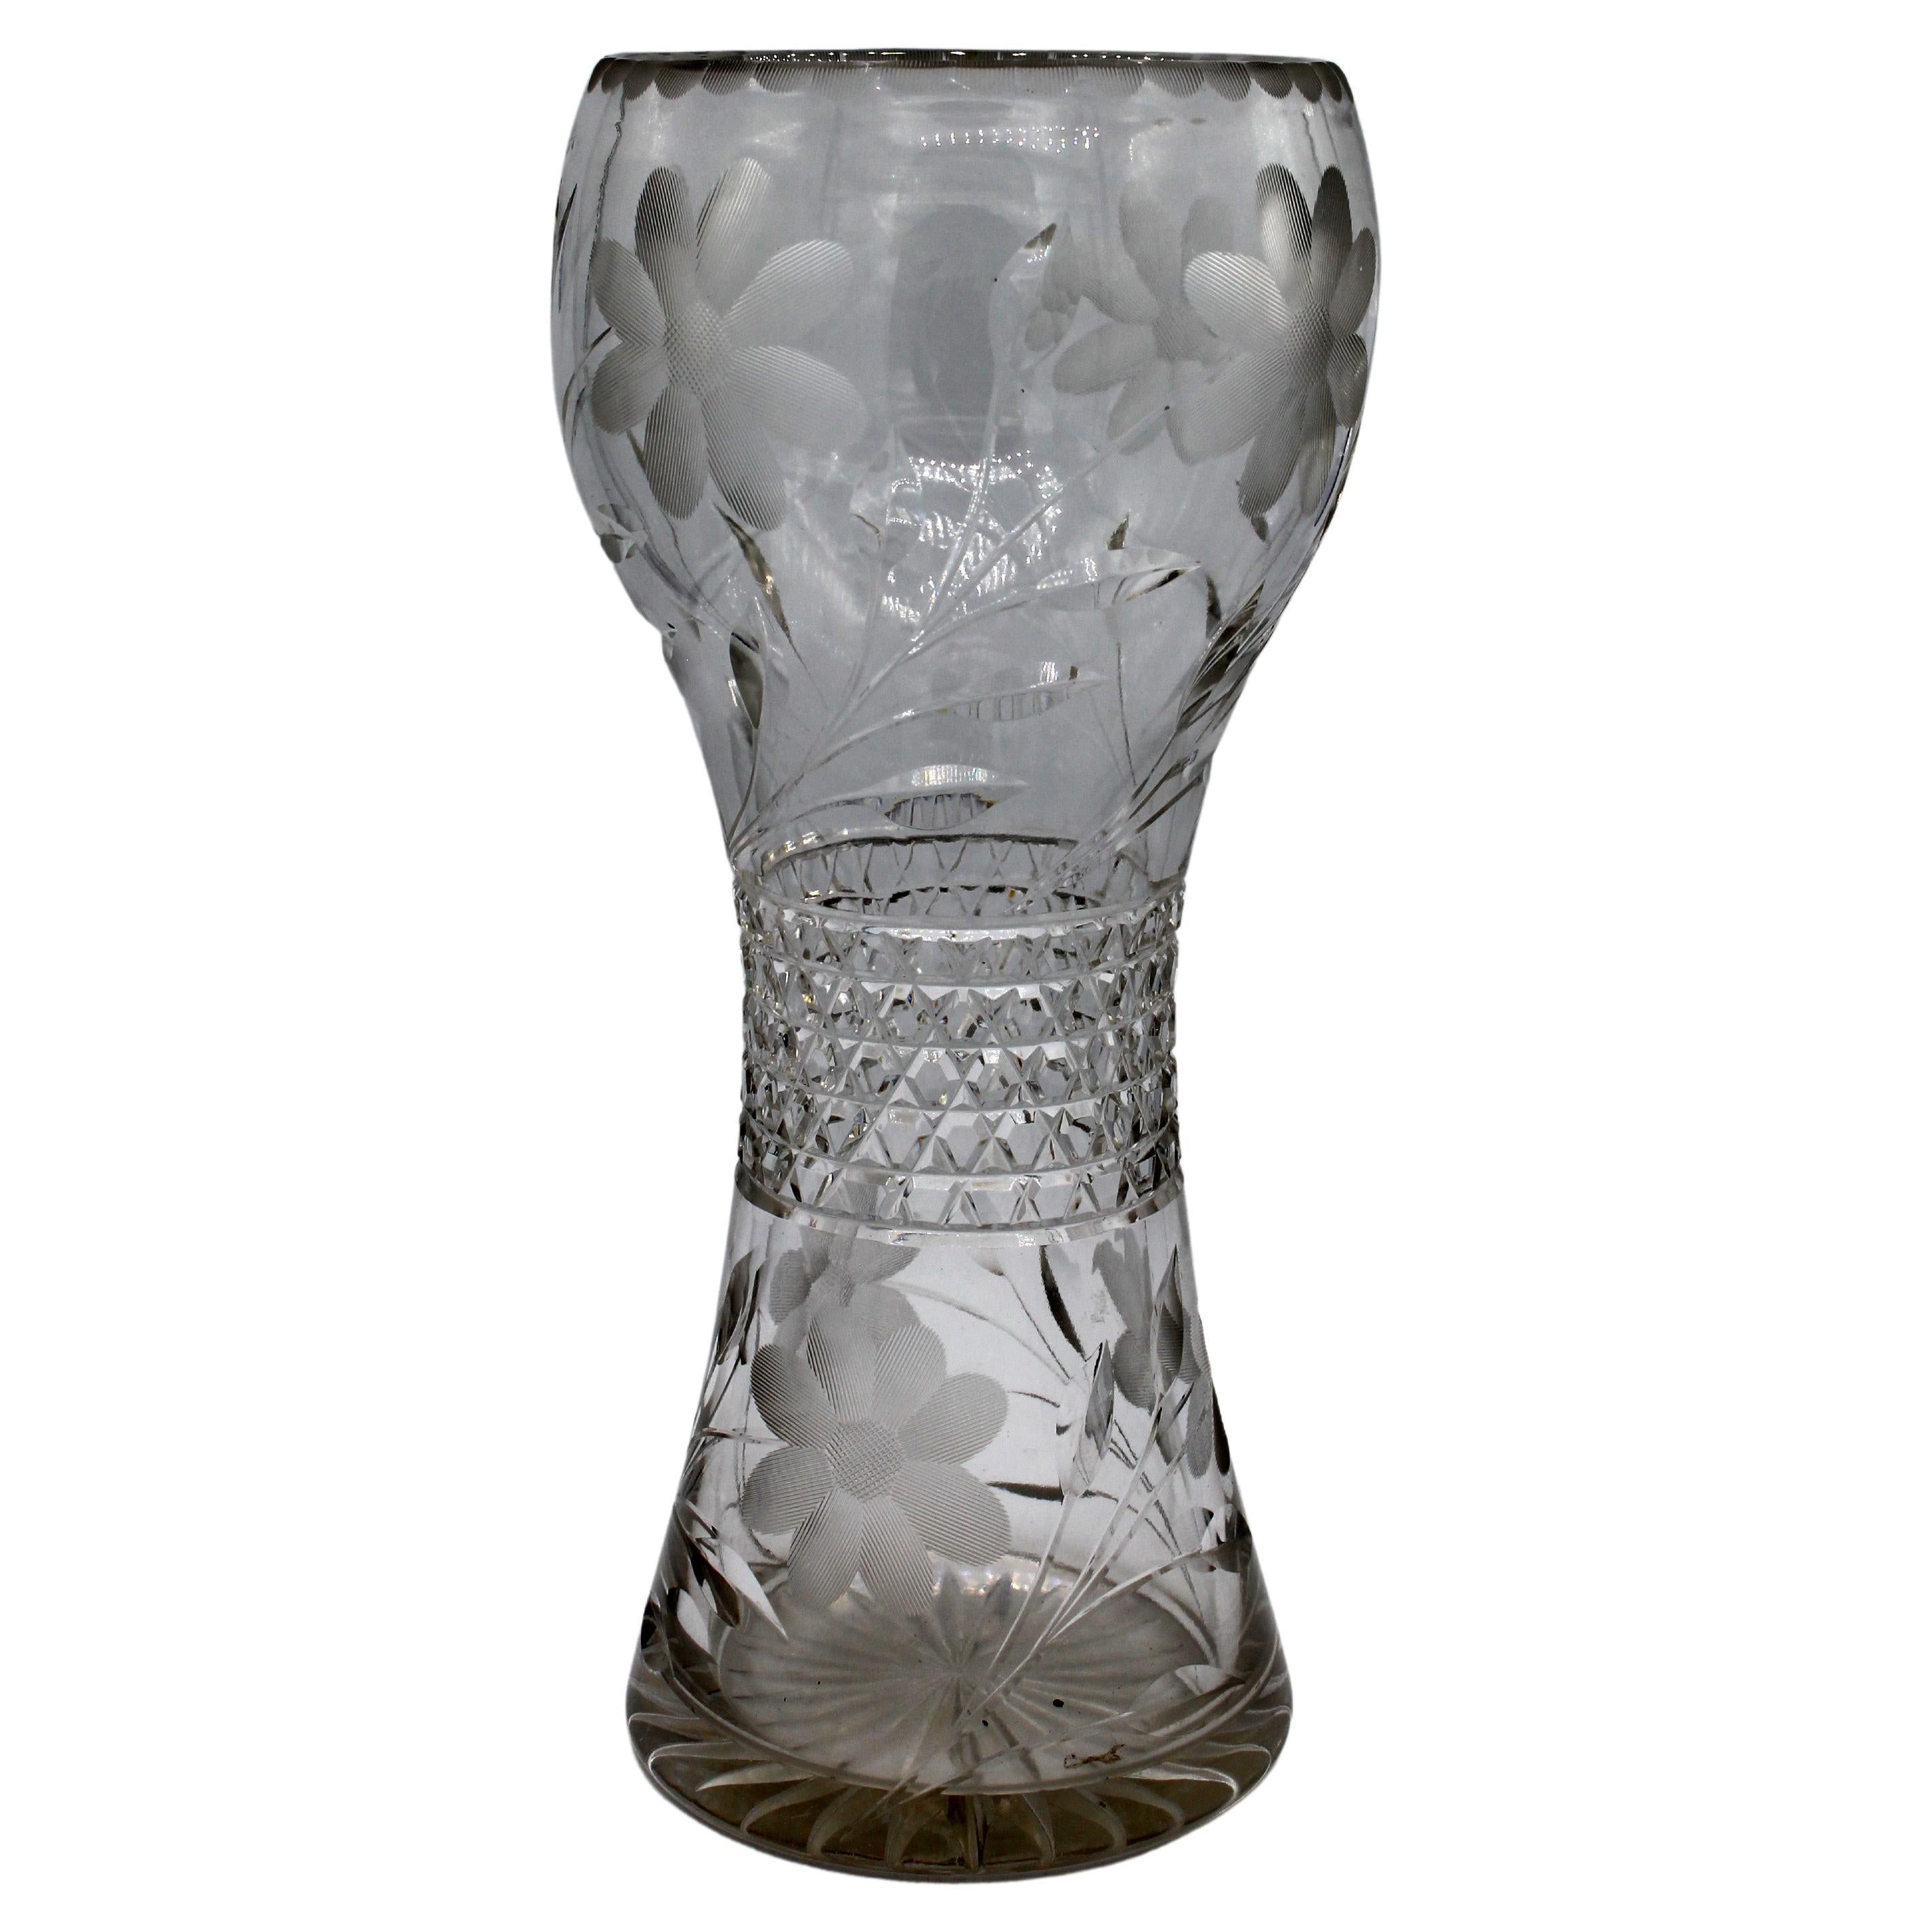 https://a.1stdibscdn.com/circa-1910-american-brilliant-cut-glass-vase-for-sale/f_64582/f_317436021671055801473/f_31743602_1671055802612_bg_processed.jpg